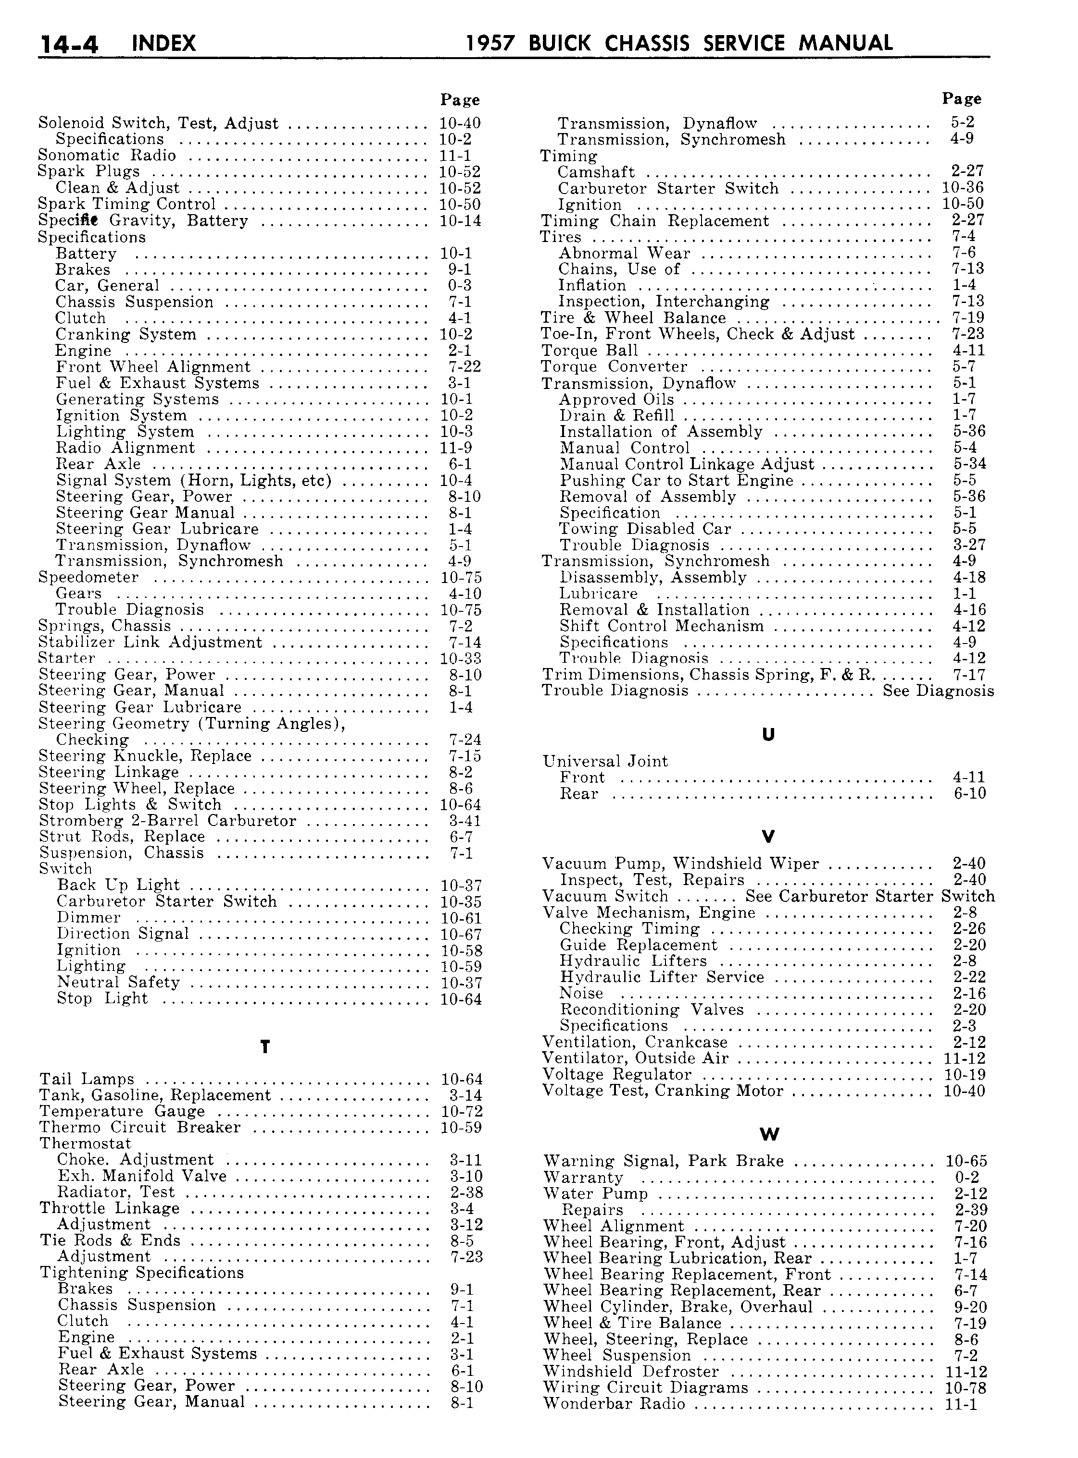 n_14 1957 Buick Shop Manual - Index-004-004.jpg